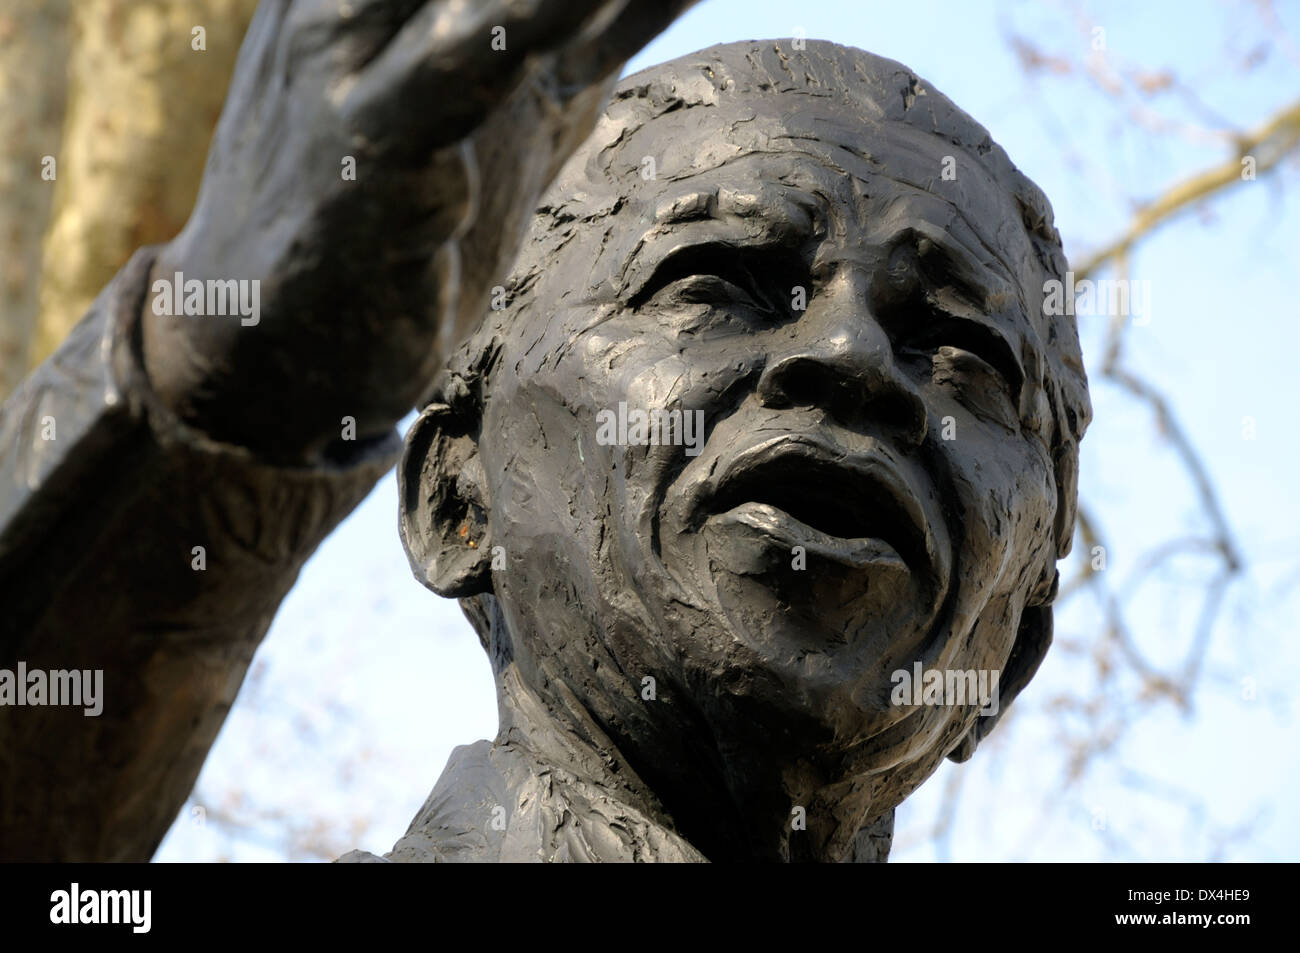 London, England, UK. Bronze statue (Ian Walters, 2007) of Nelson Mandela in Parliament Square. Stock Photo